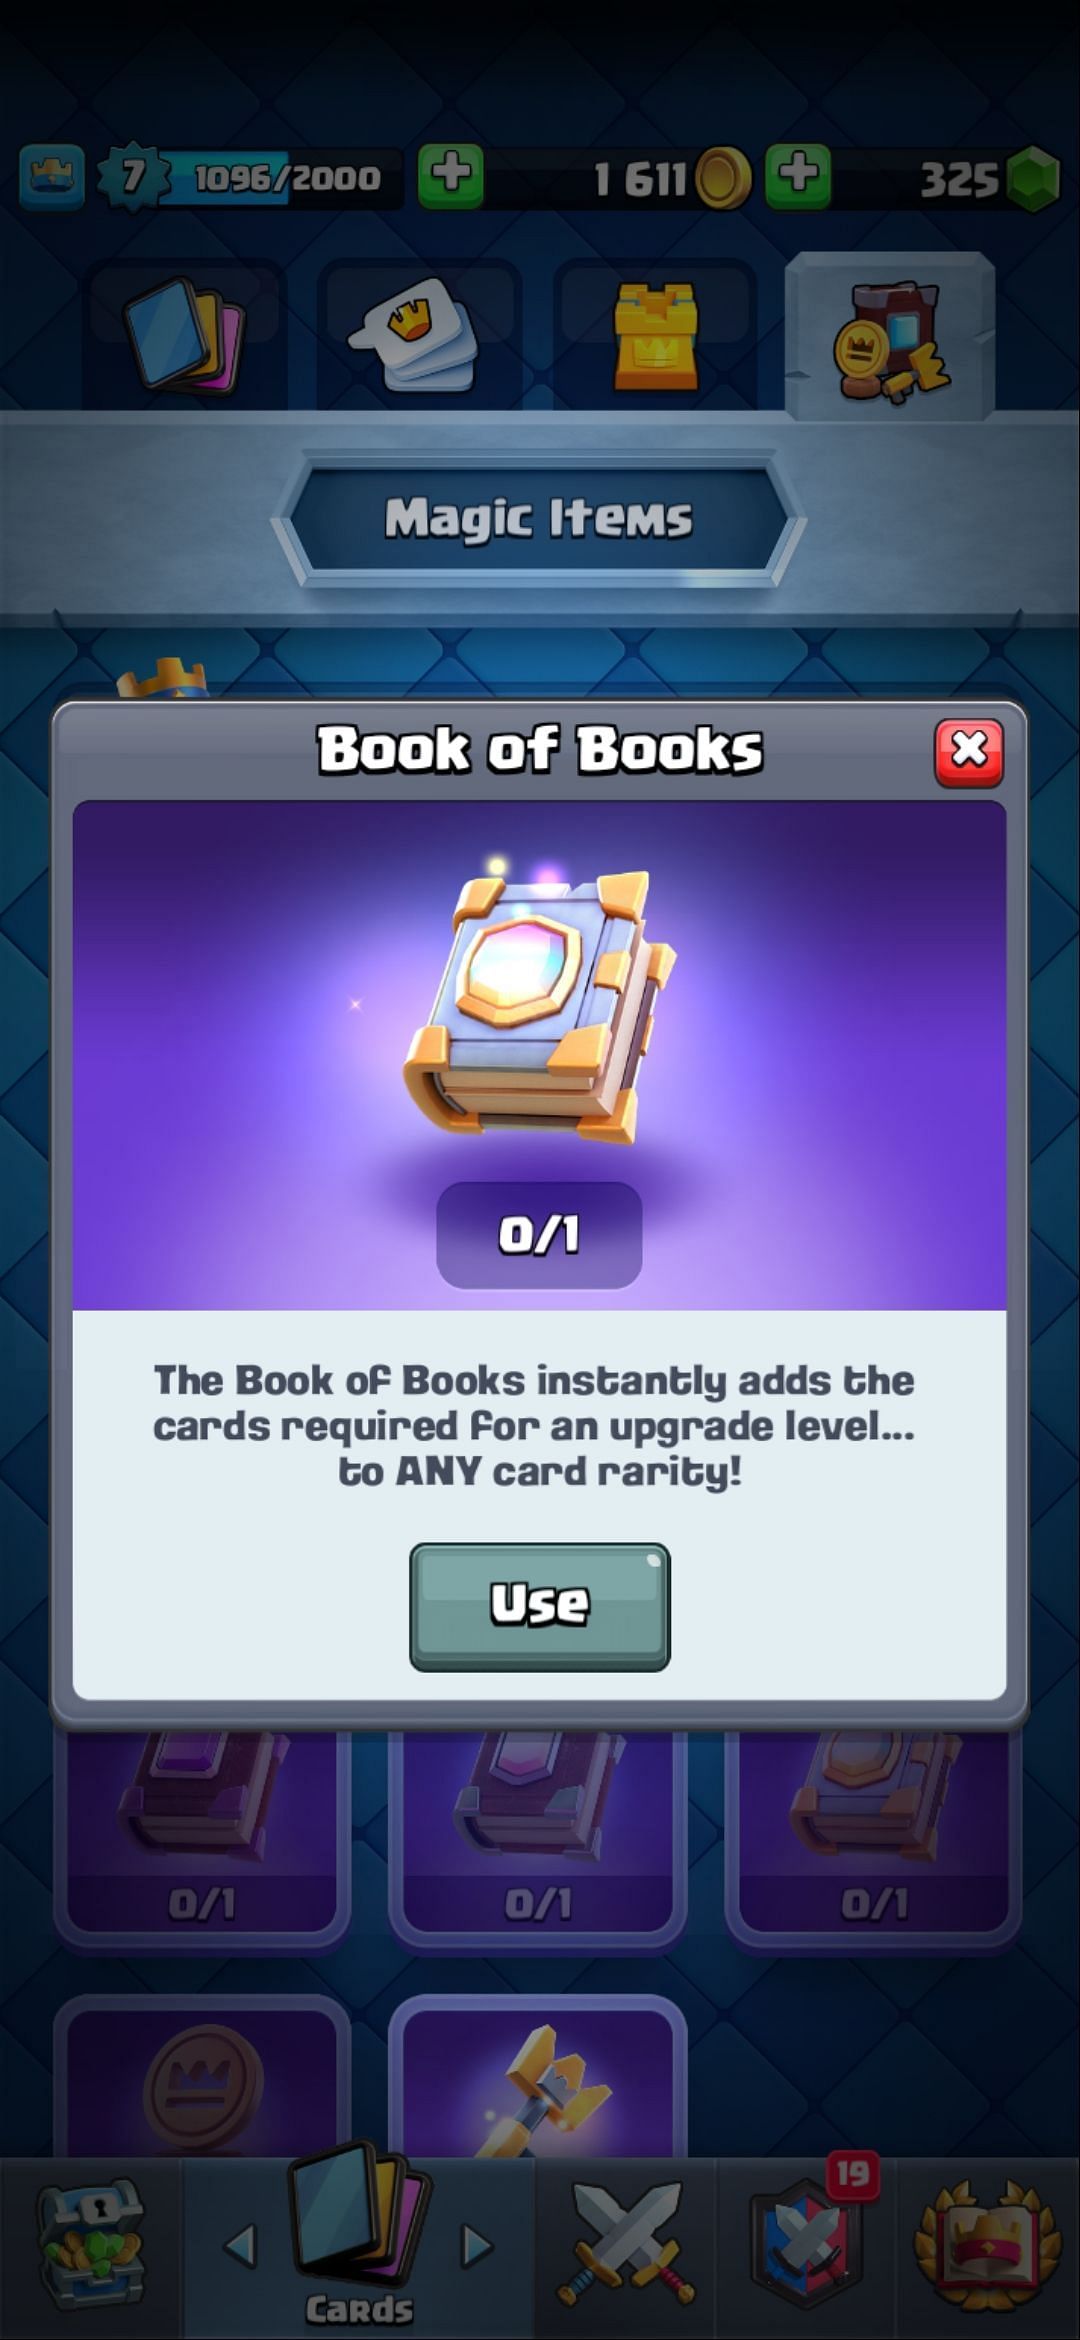 The Book of Cards (Image via Sportskeeda)